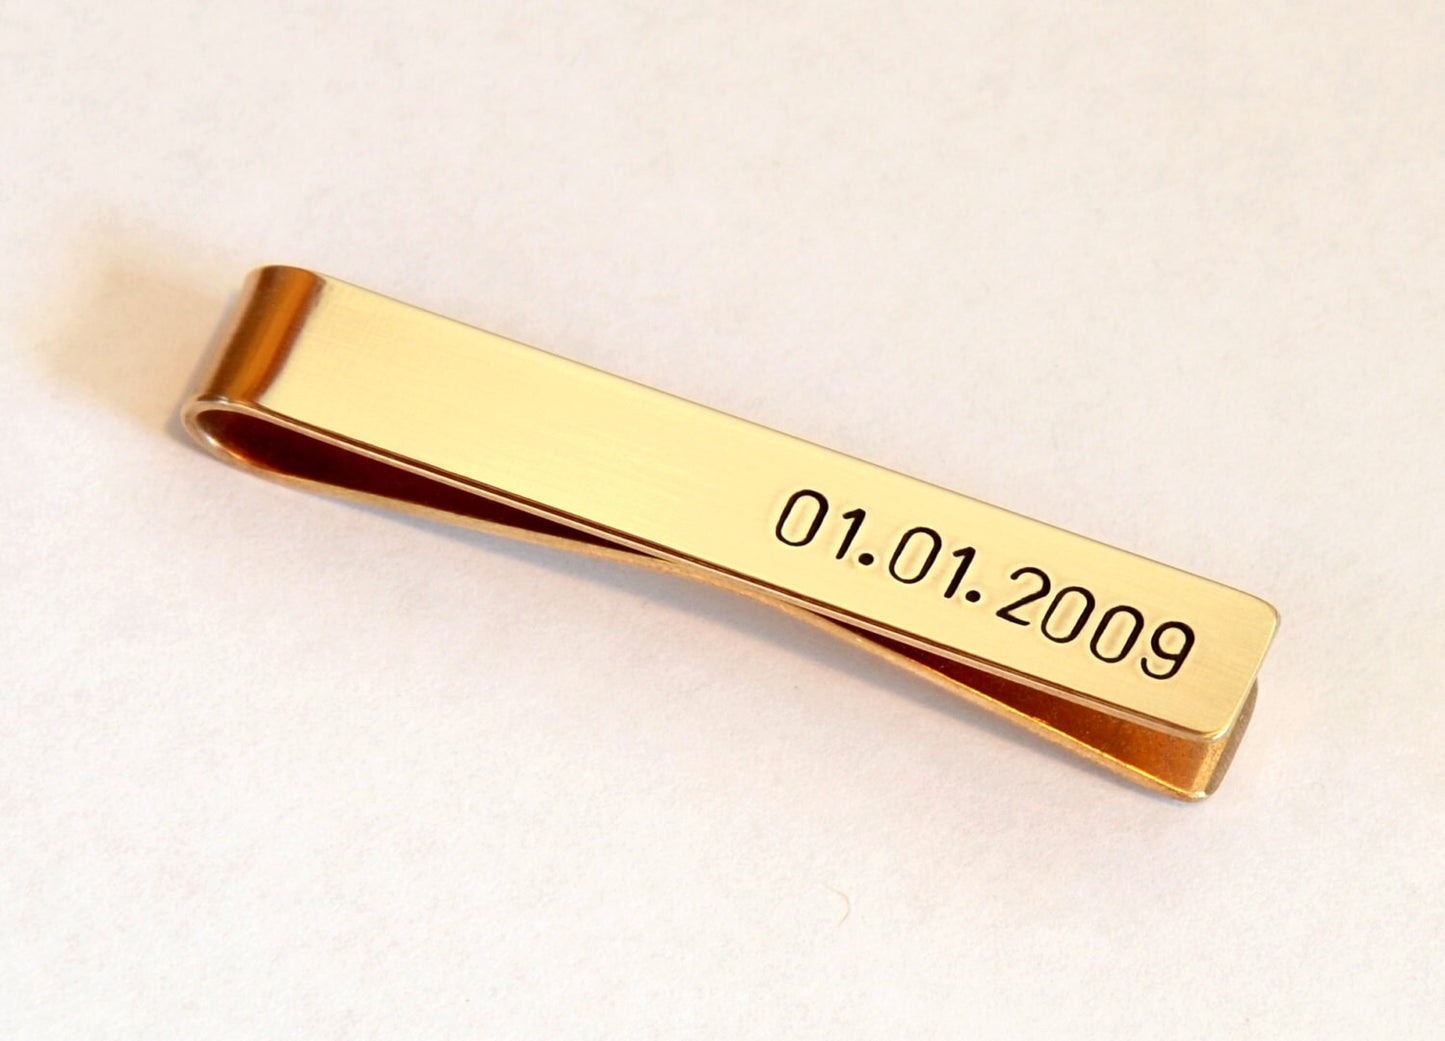 Bronze Tie Clip for the 8th Anniversary - Personalized Tie Bar